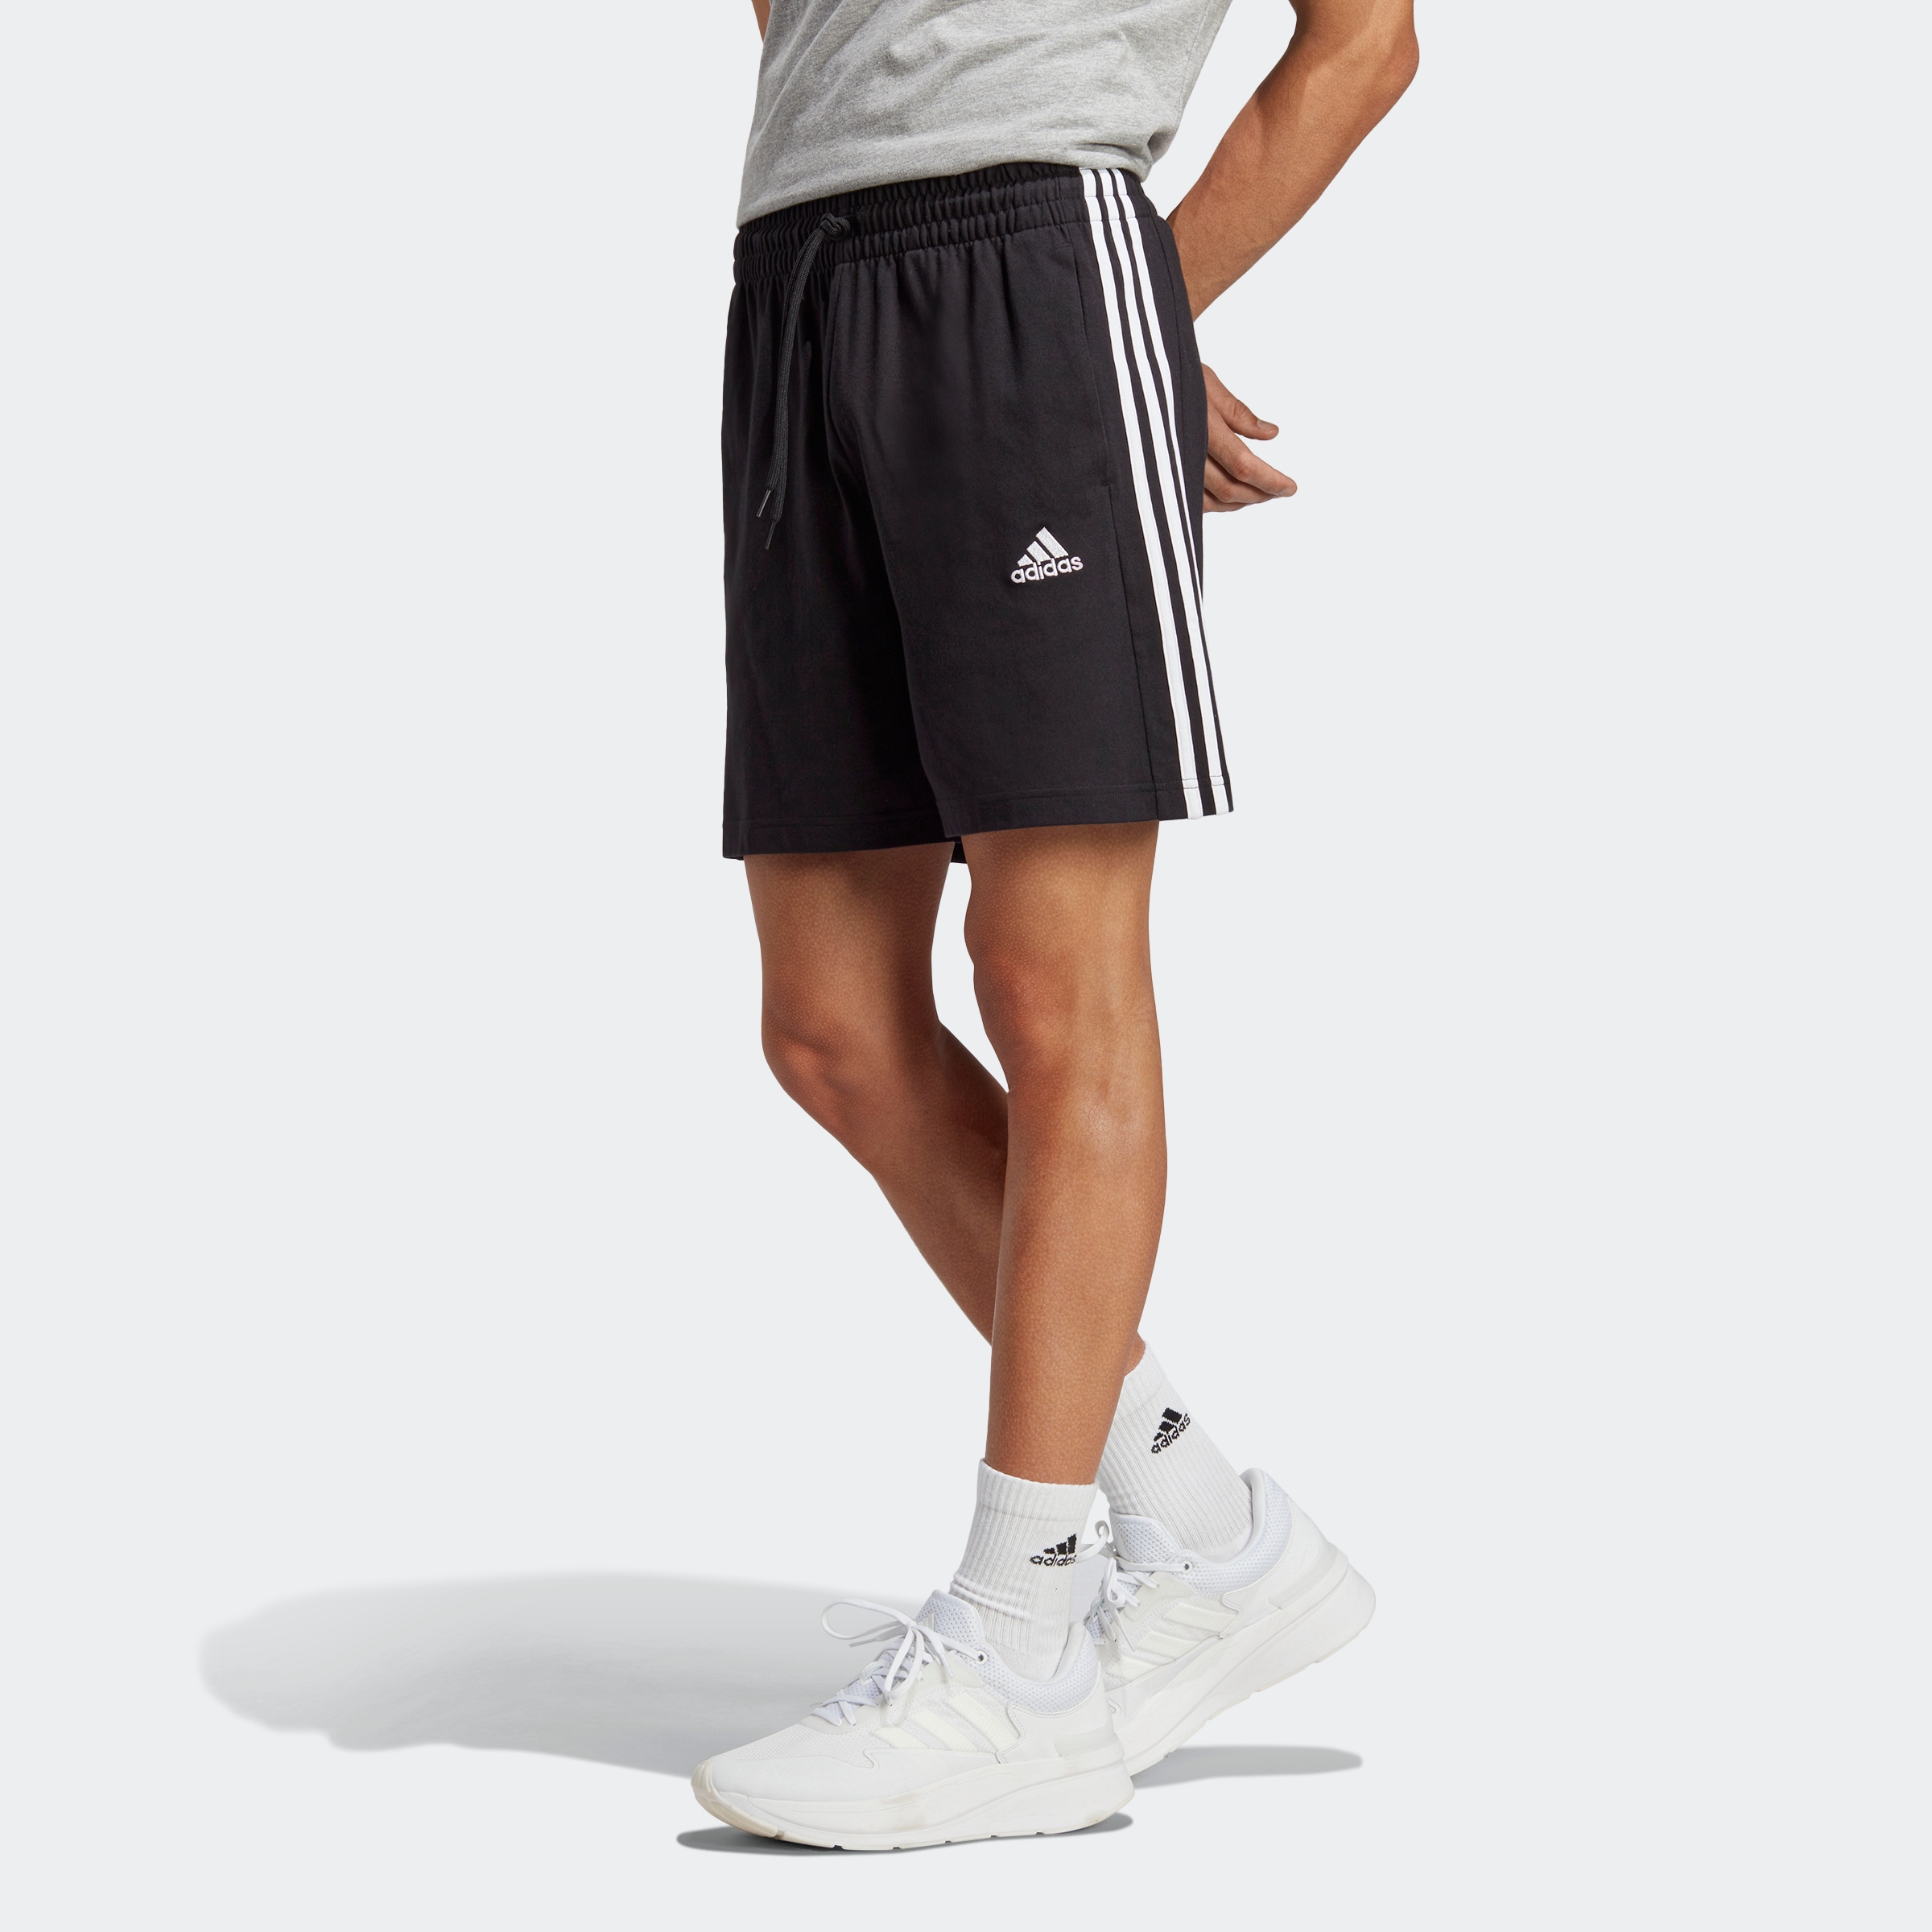 SJ adidas 7 3S (1 SHO«, ♕ Shorts bei tlg.) Sportswear »M